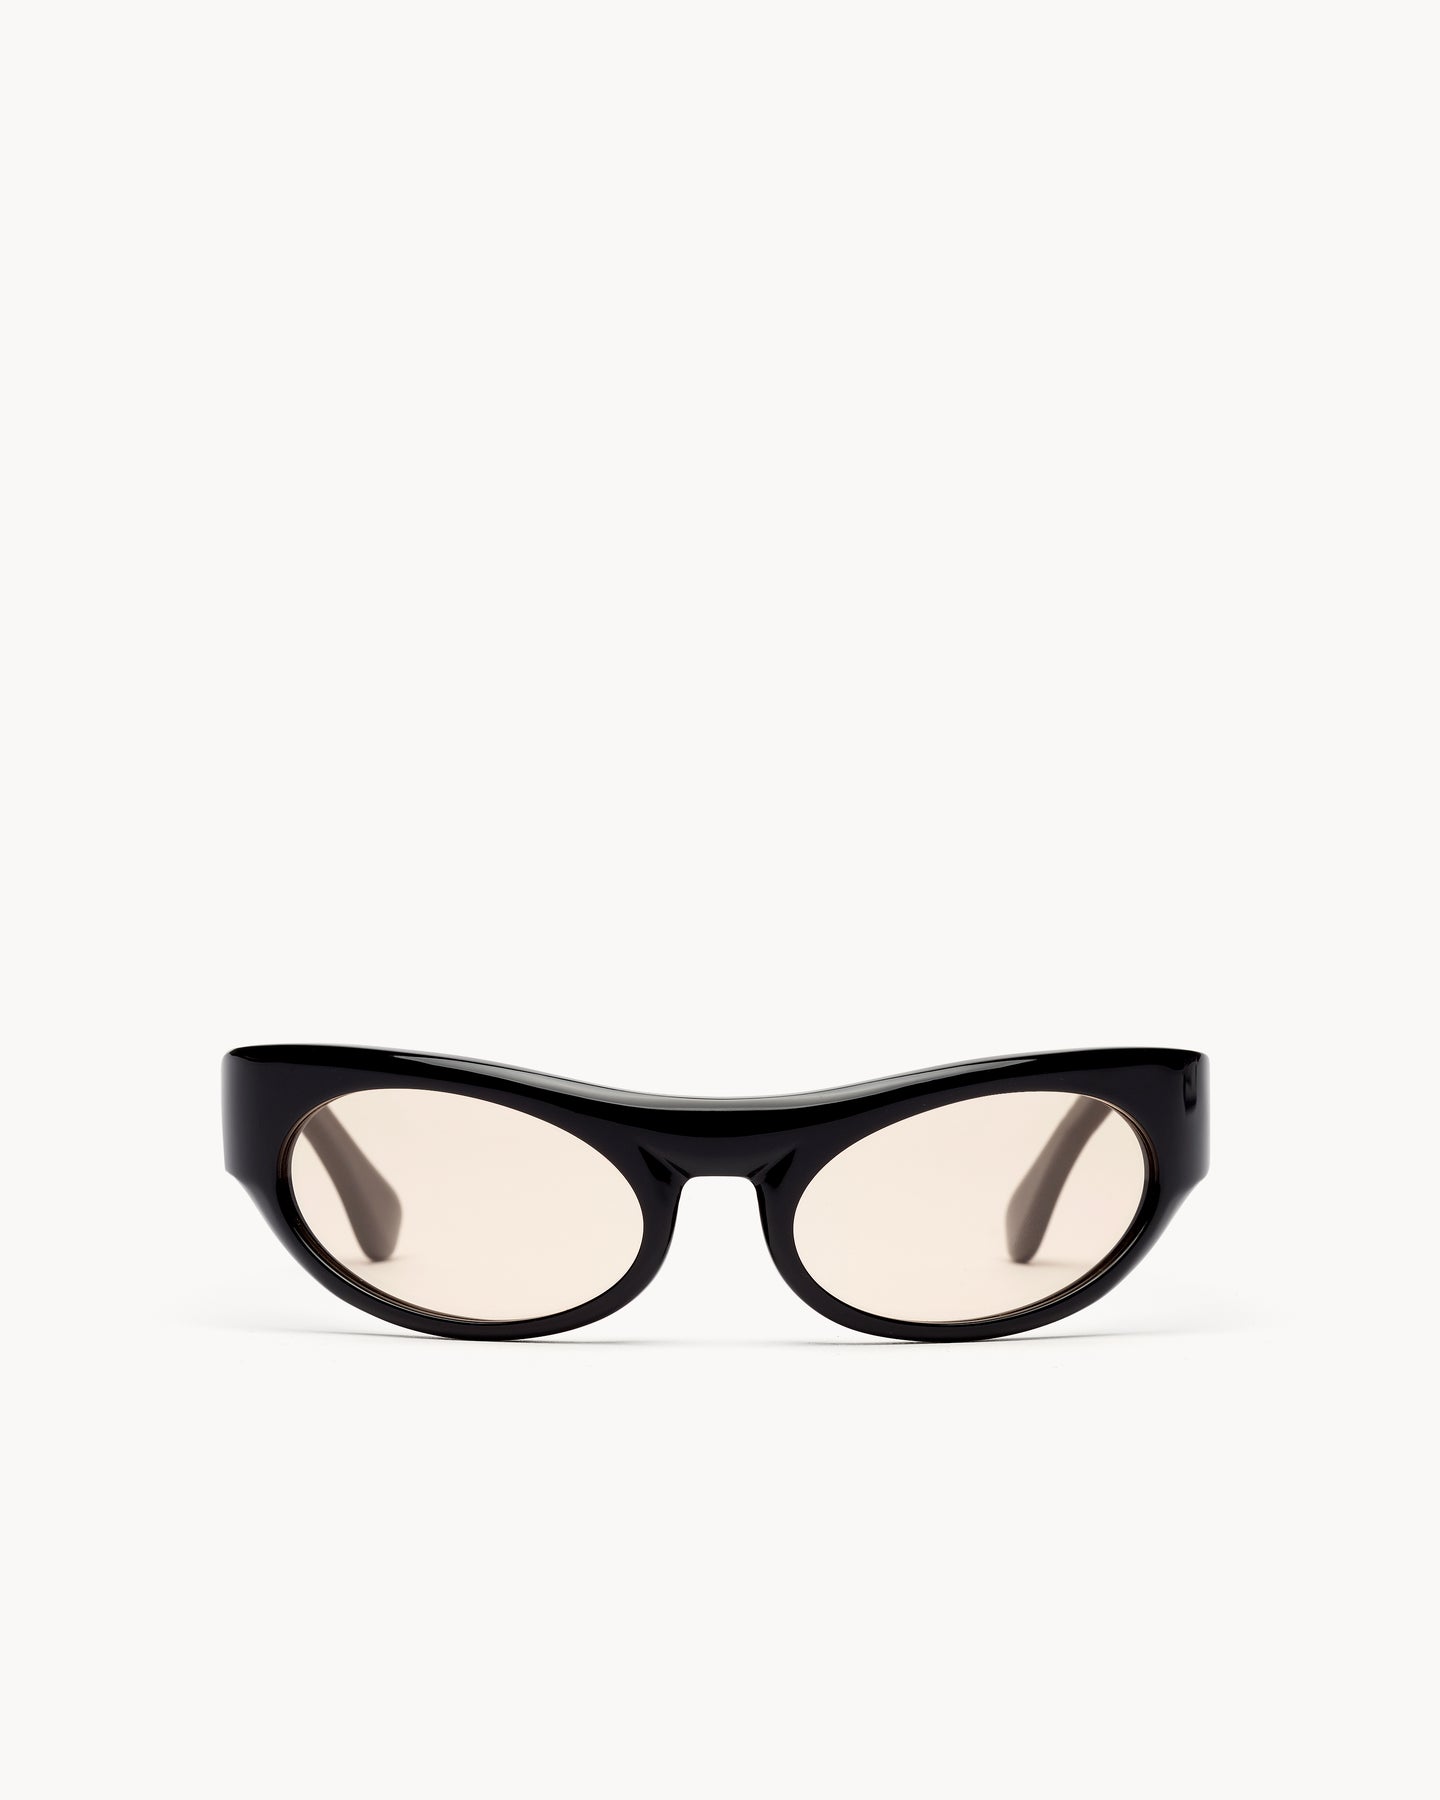 Port Tanger Touba Sunglasses in Black Acetate  and  Amber Lenses 1